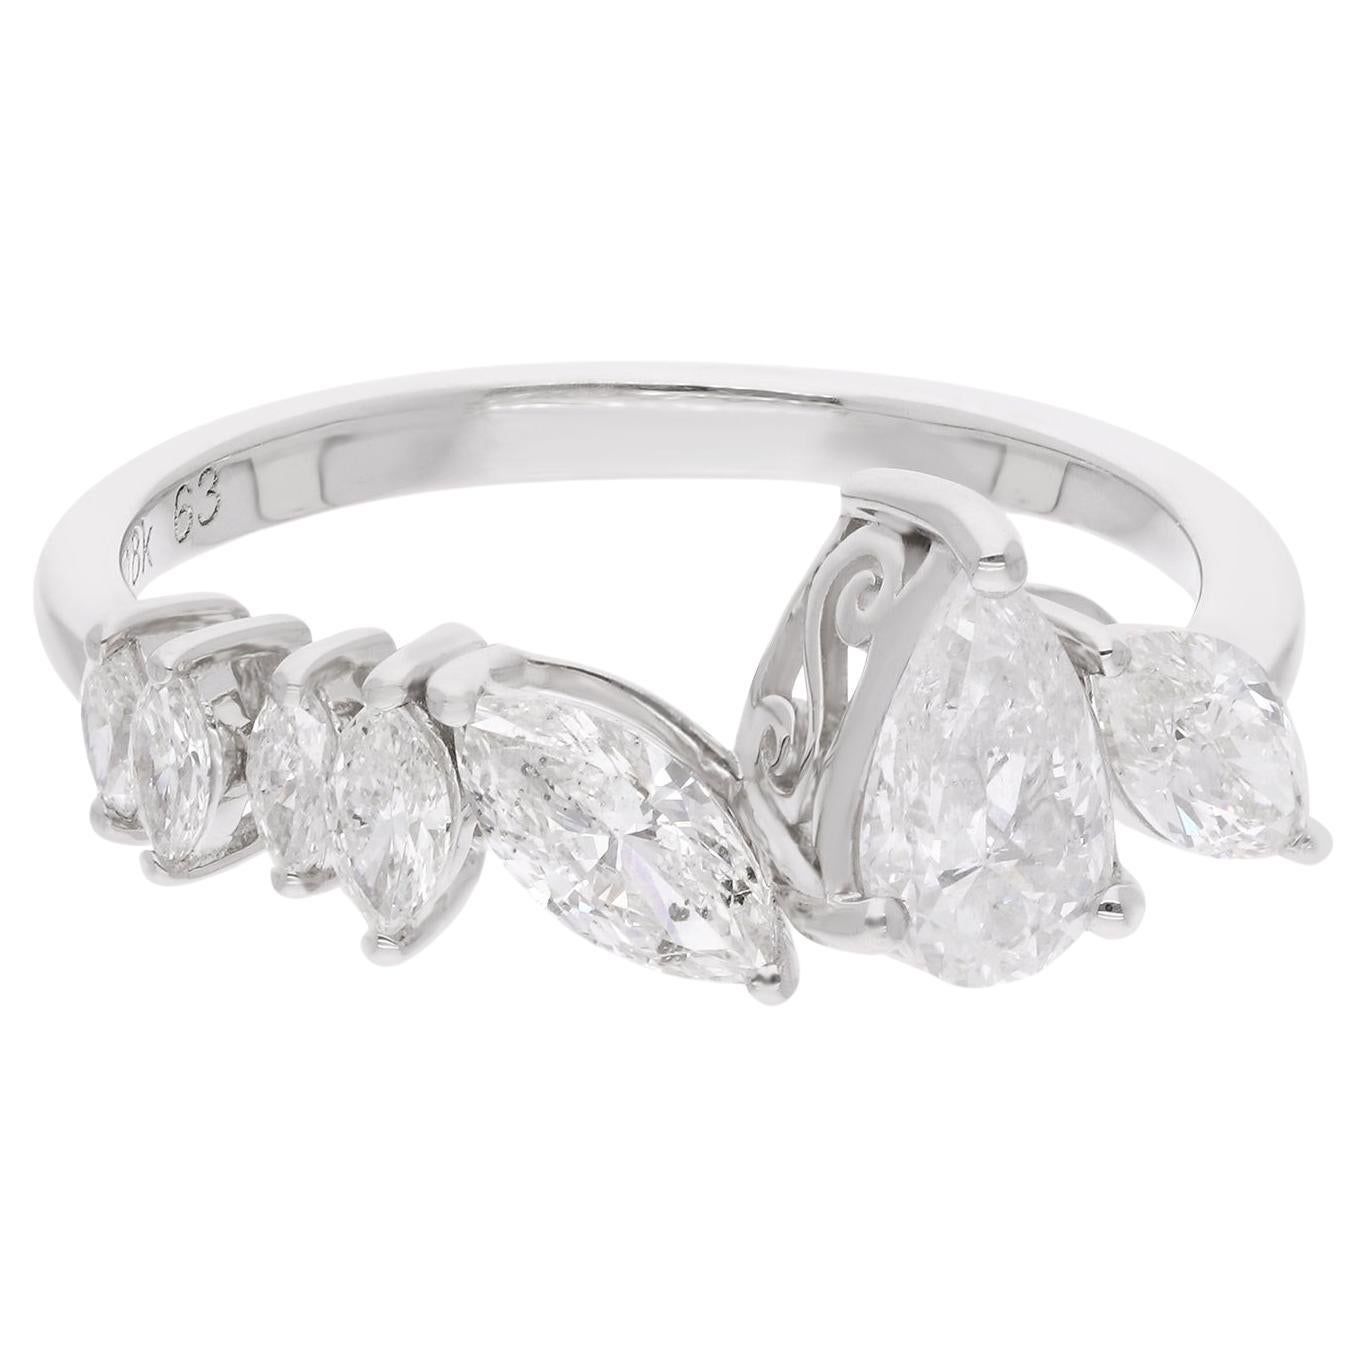 1.20 Carat Pear & Marquise Diamond Ring 18 Karat White Gold Handmade Jewelry